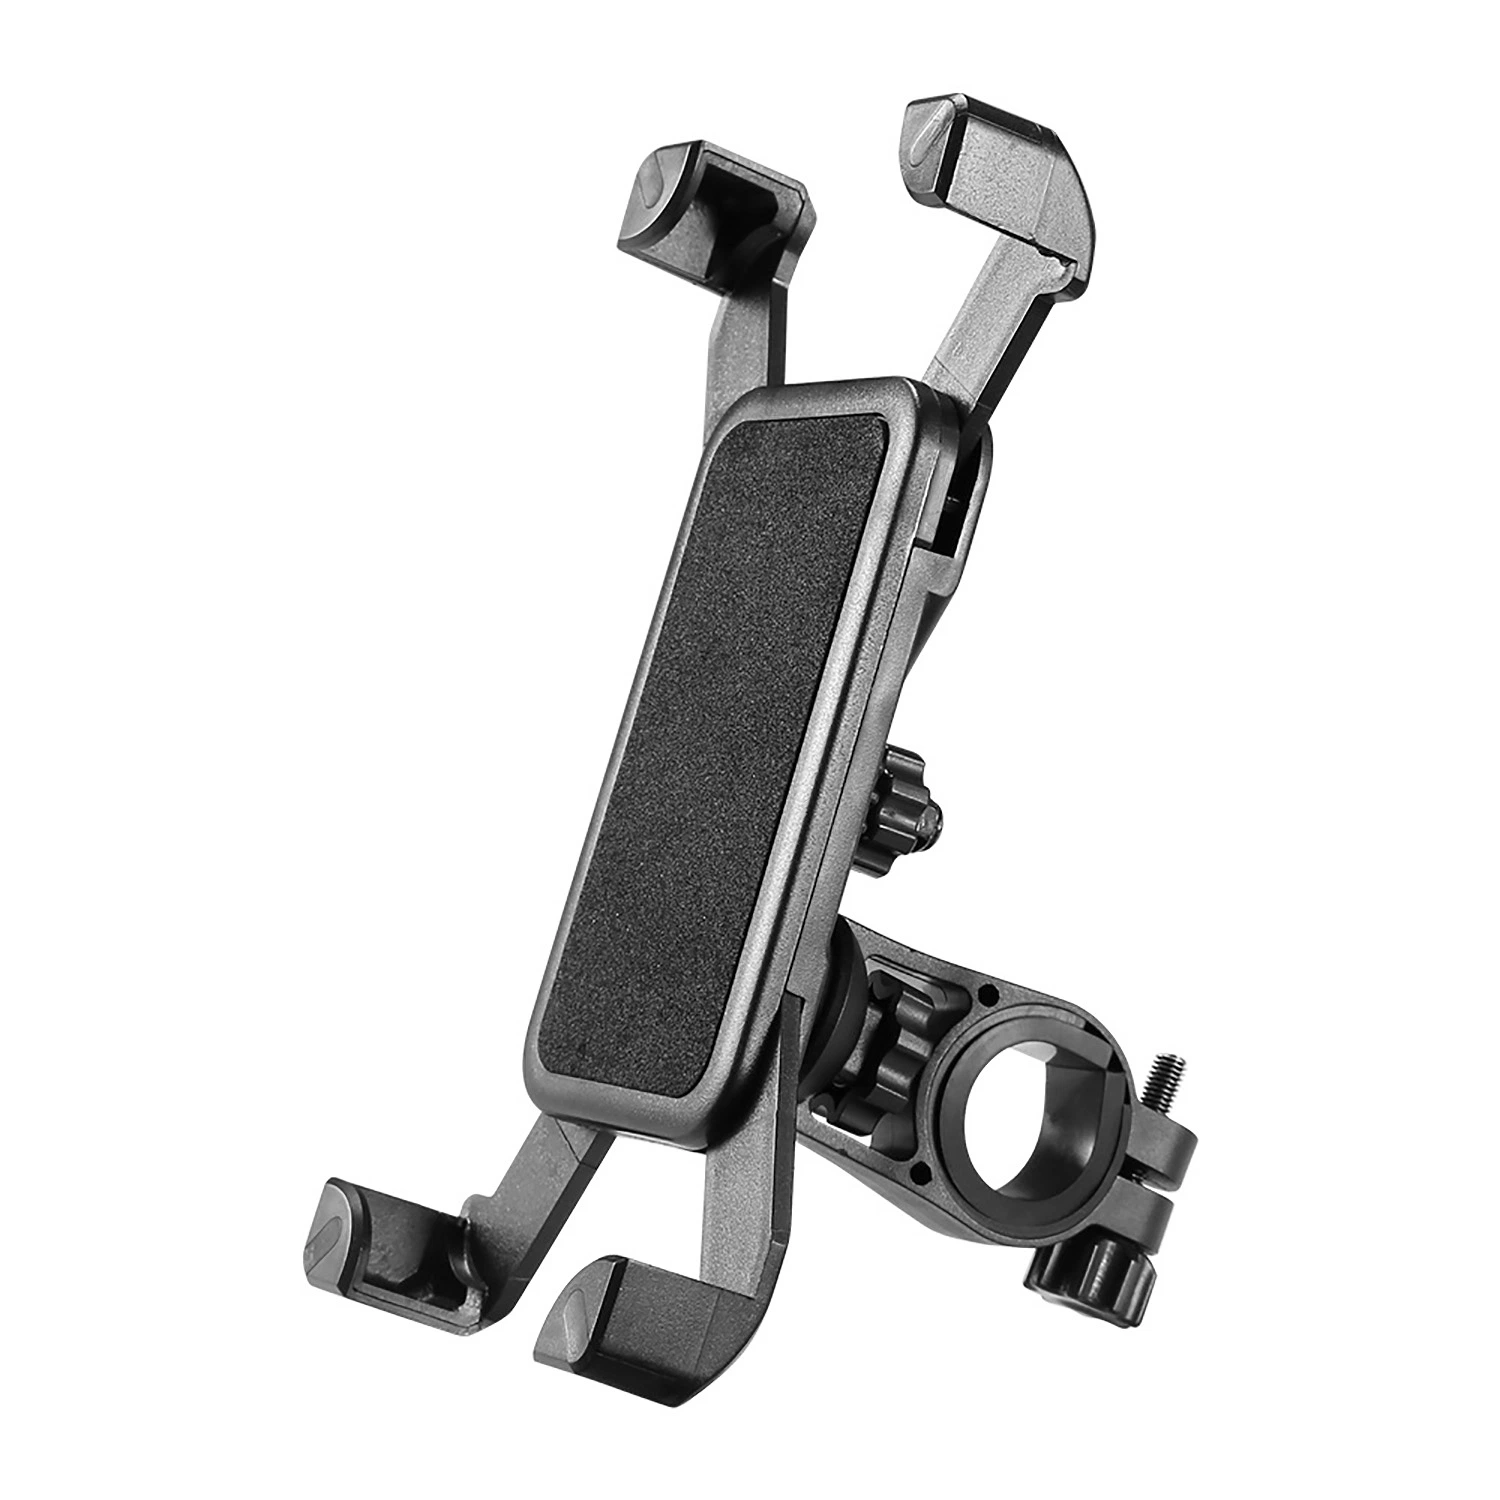 Universal Adjustable 360degree Rotation Bicycle Motorcycle Handlebar Phone Mount Holder Ci23868